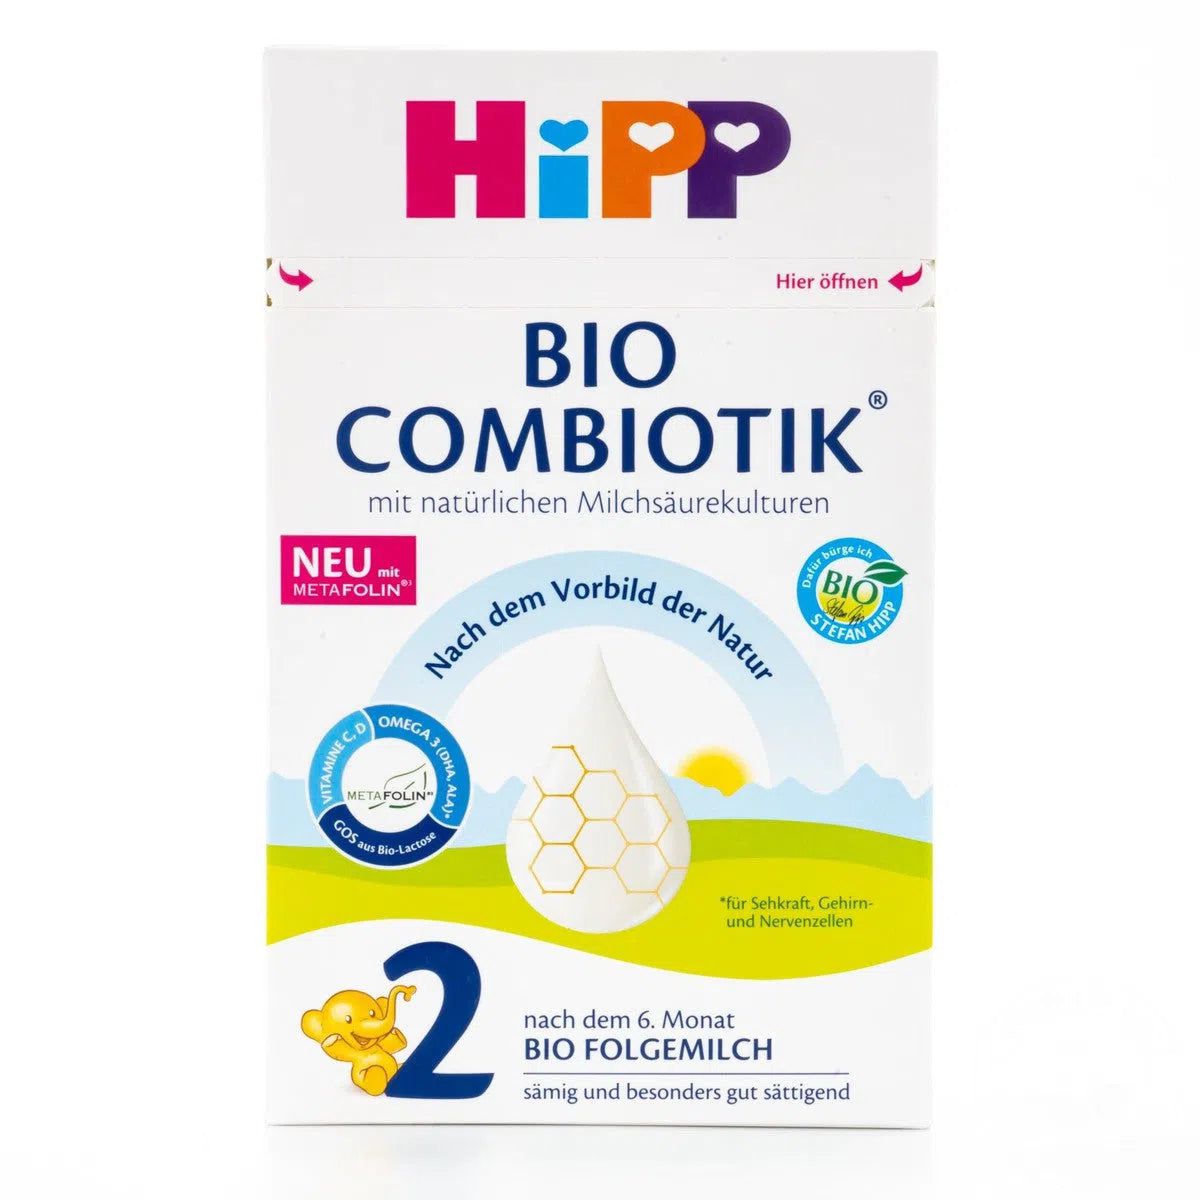 HiPP Stage 2 Combiotic Formula - German Version (600g) - 40 Boxes